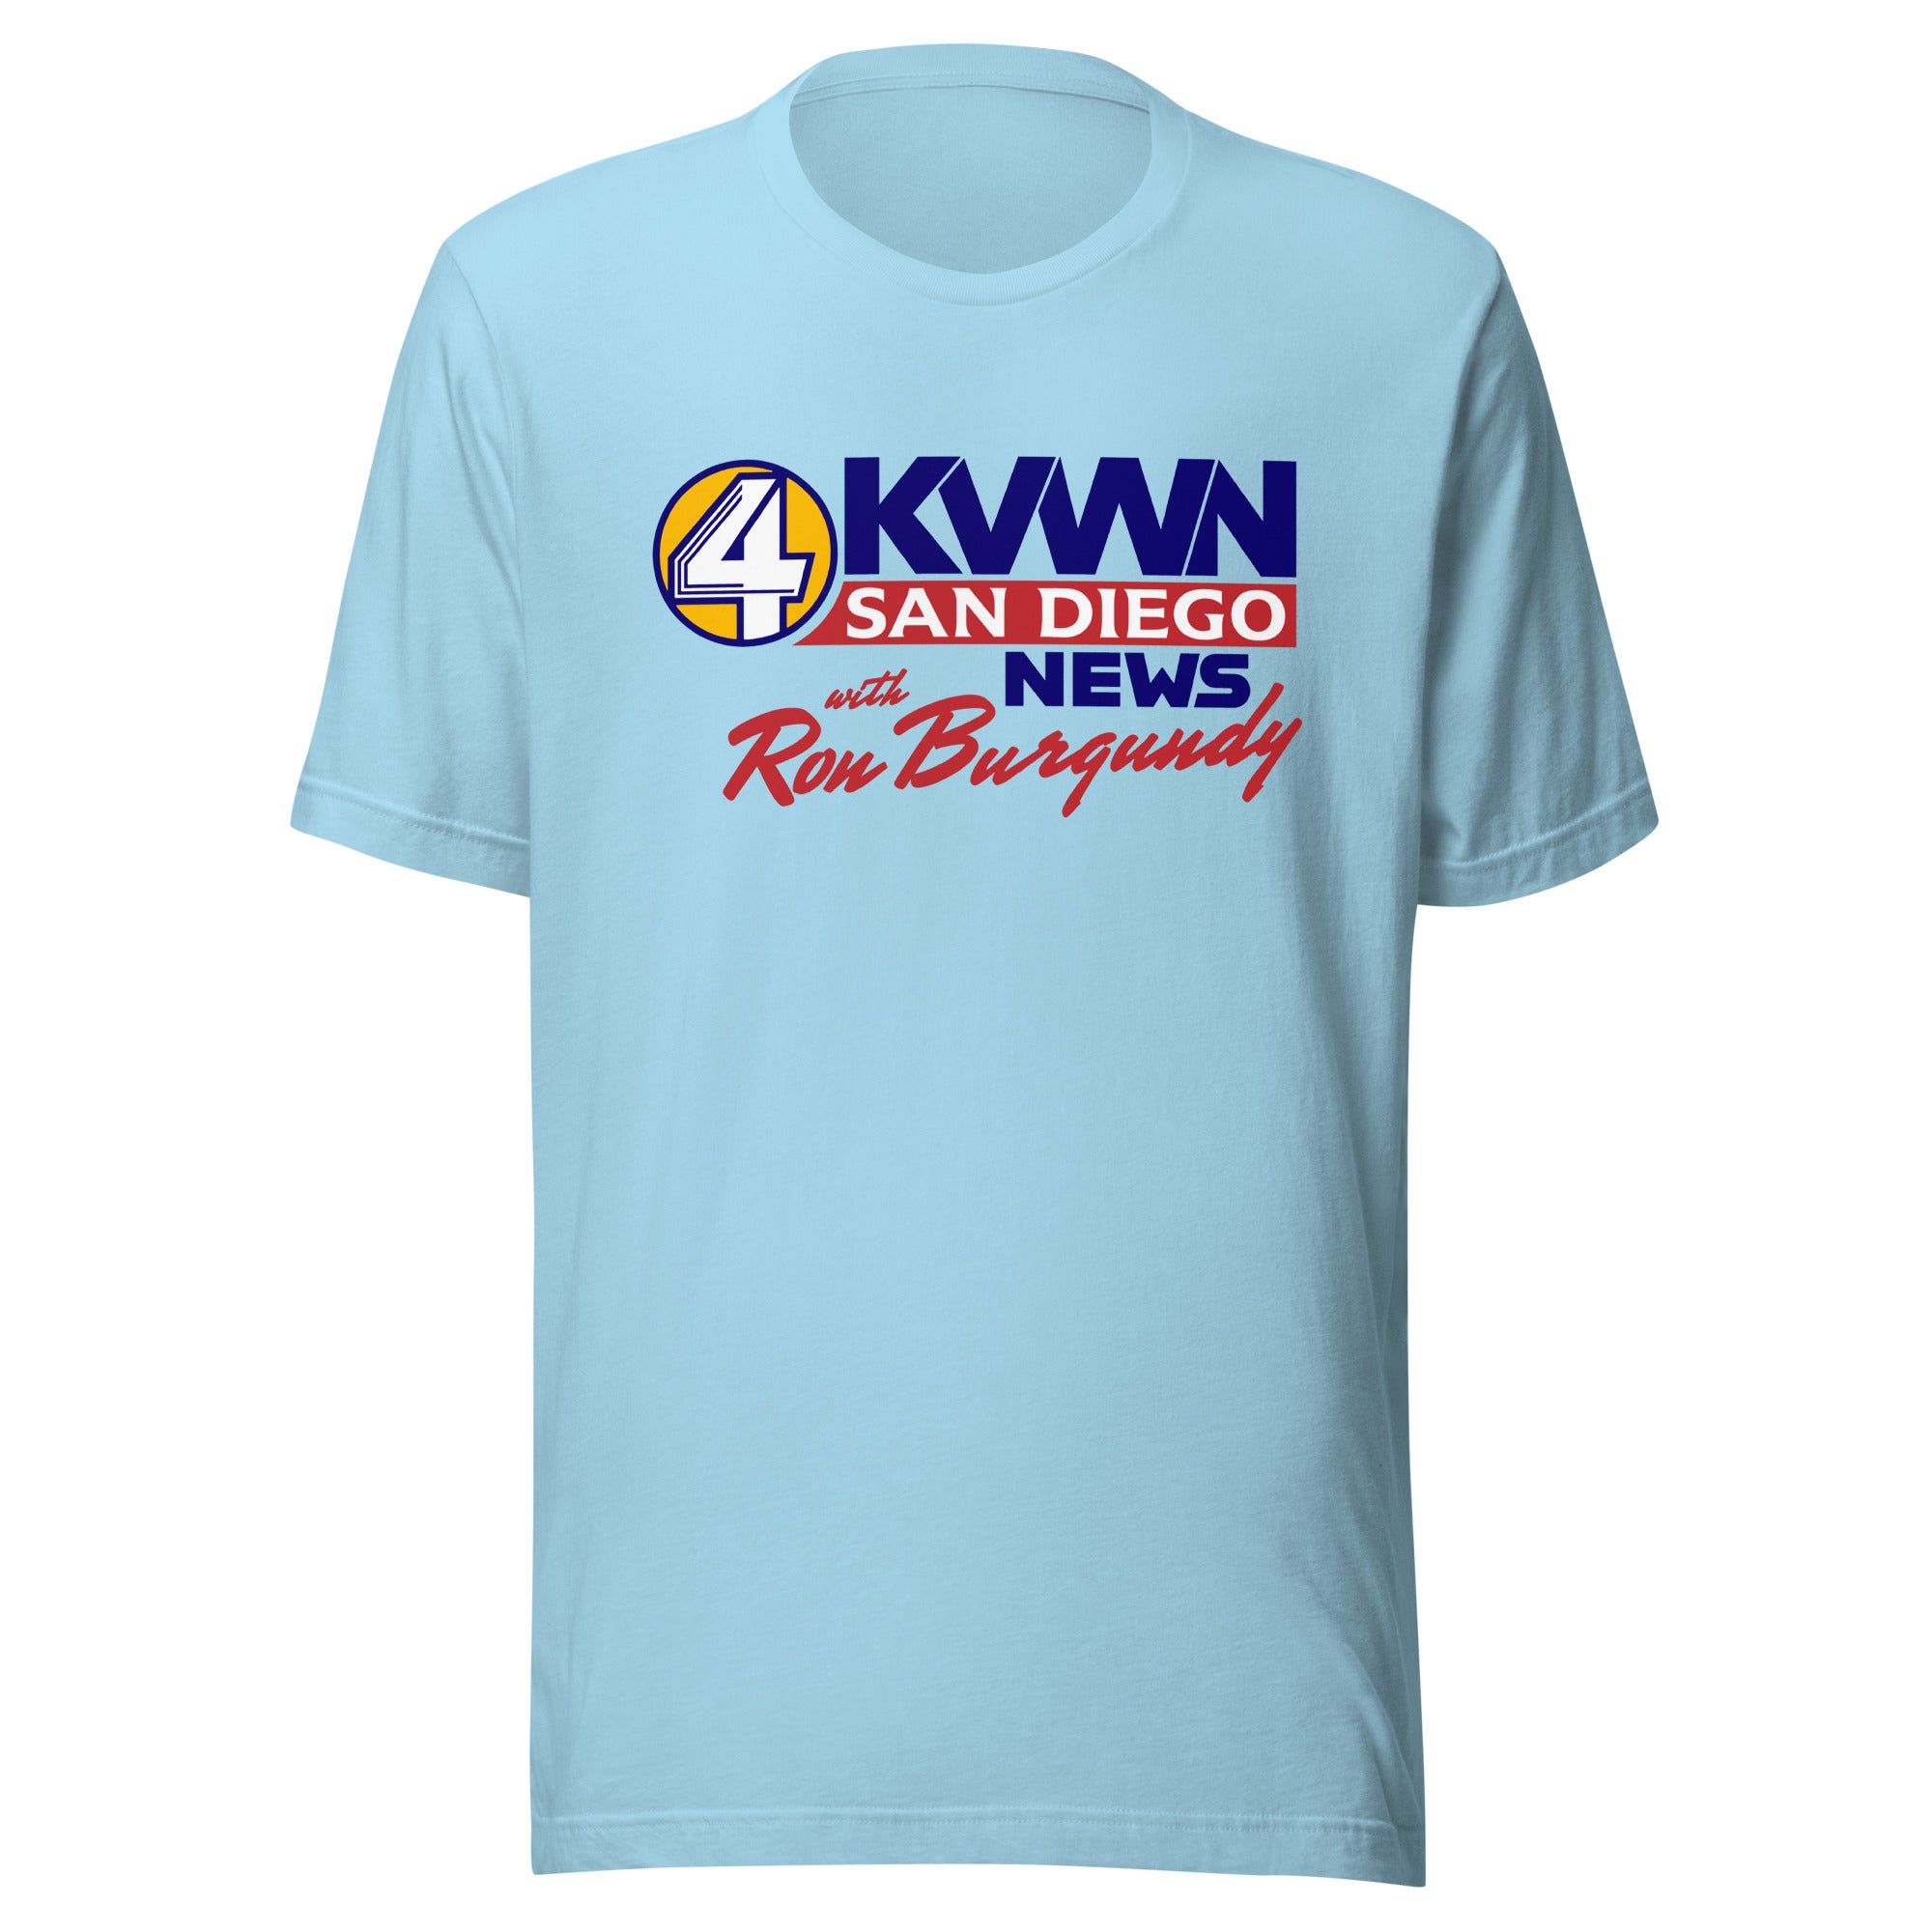 KVWN News with Ron Burgundy Shirt